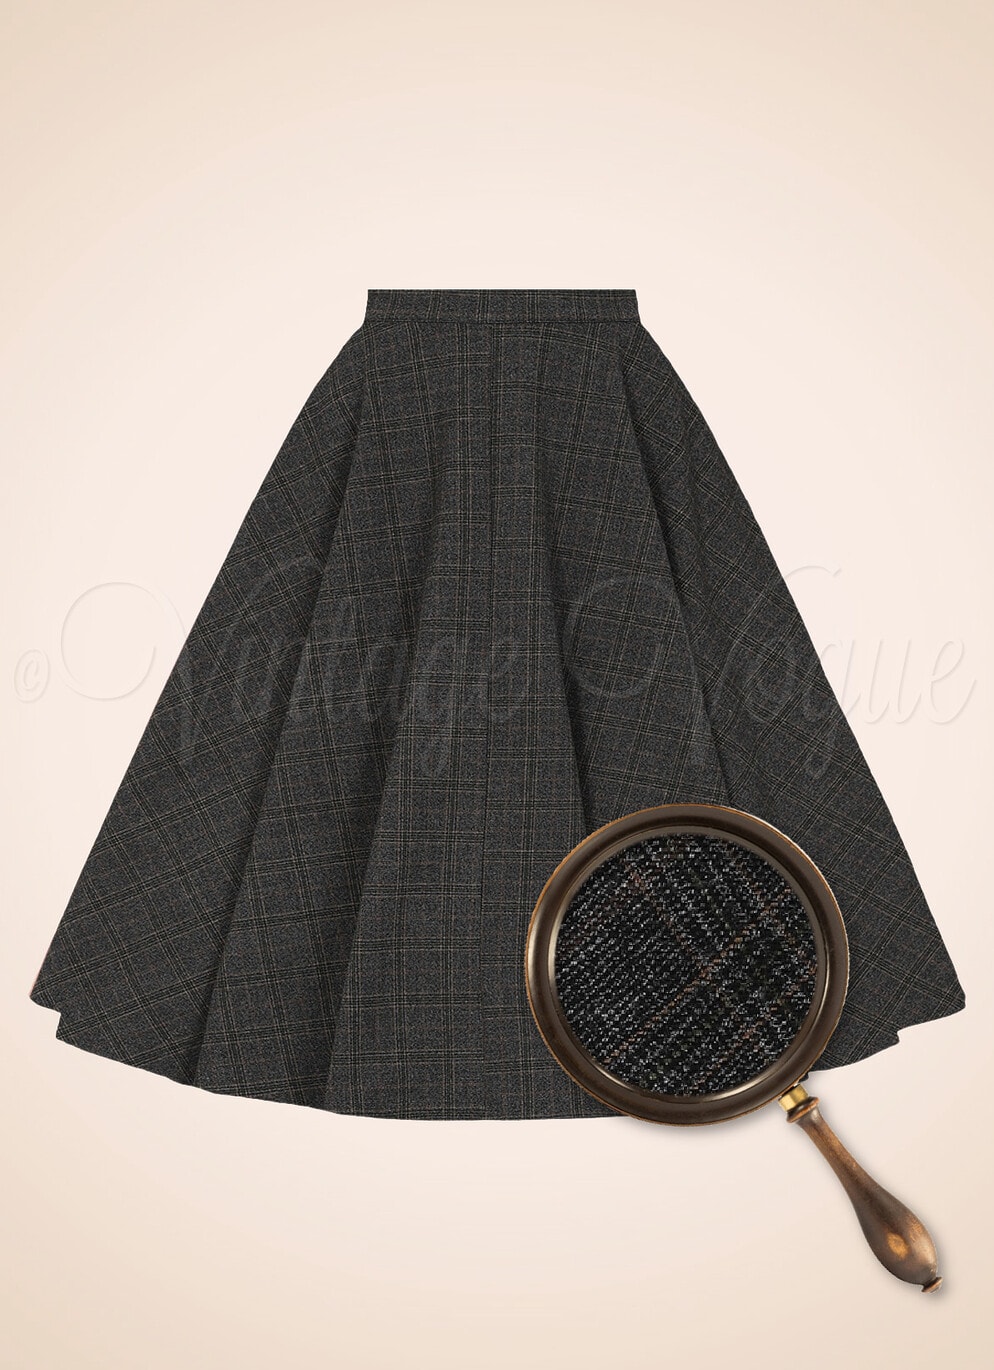 Collectif Vintage Academia Dandy Tartan Teller Rock Professor Check Skirt in Grau Braun Büro Office Business